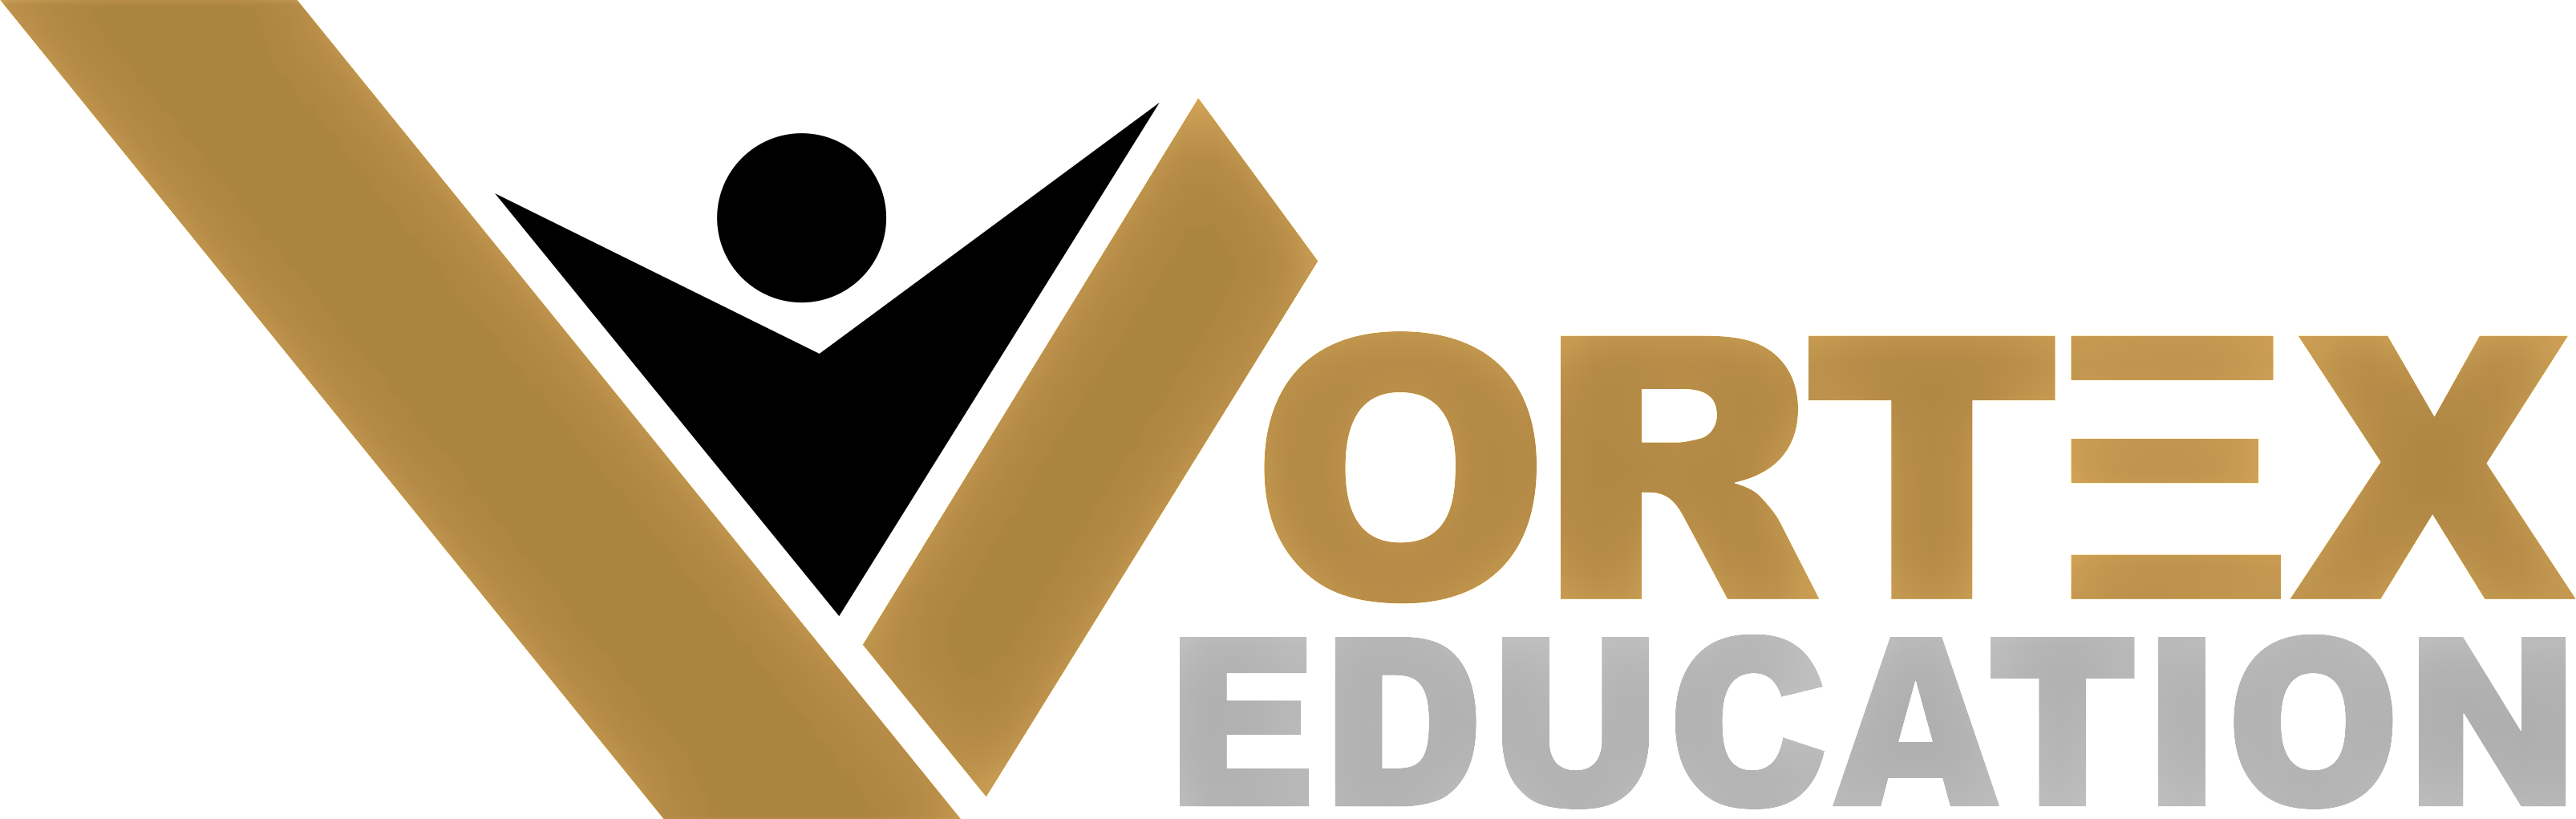 Vortex Education